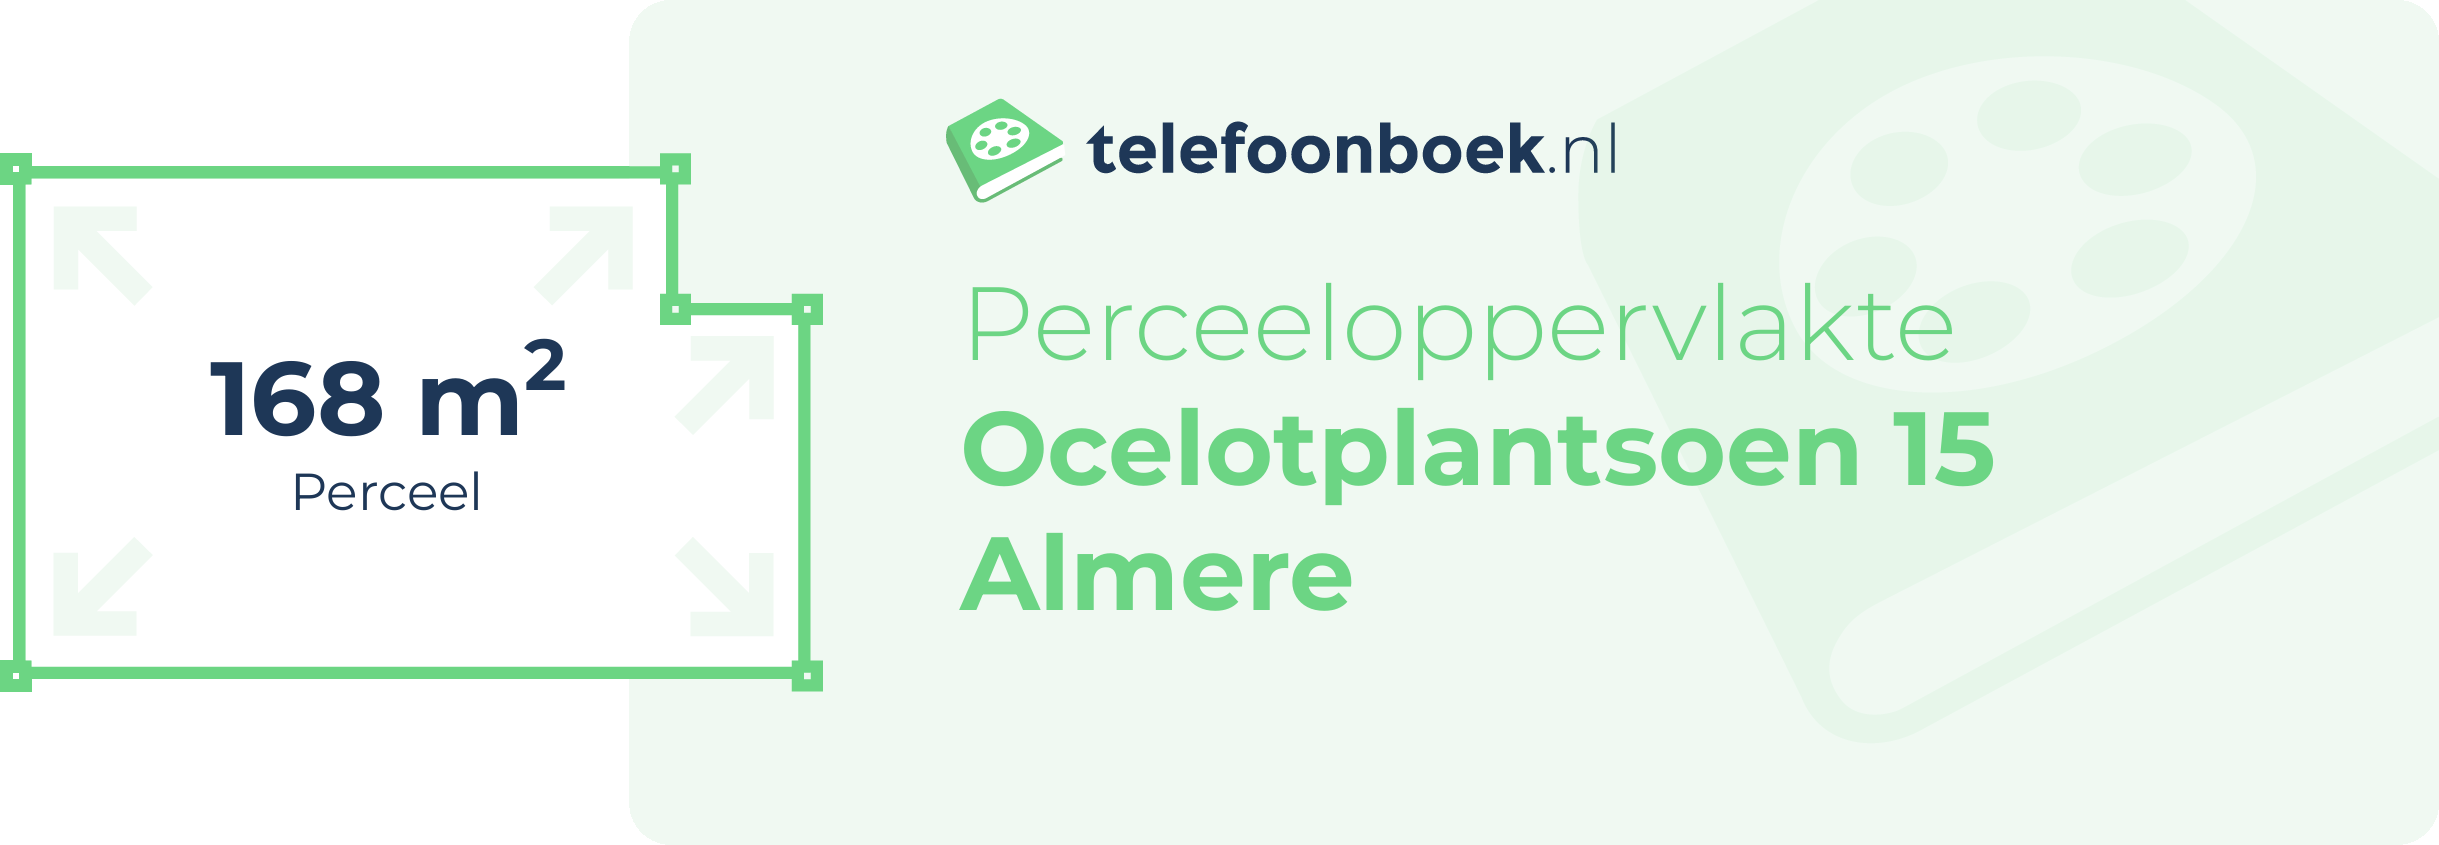 Perceeloppervlakte Ocelotplantsoen 15 Almere